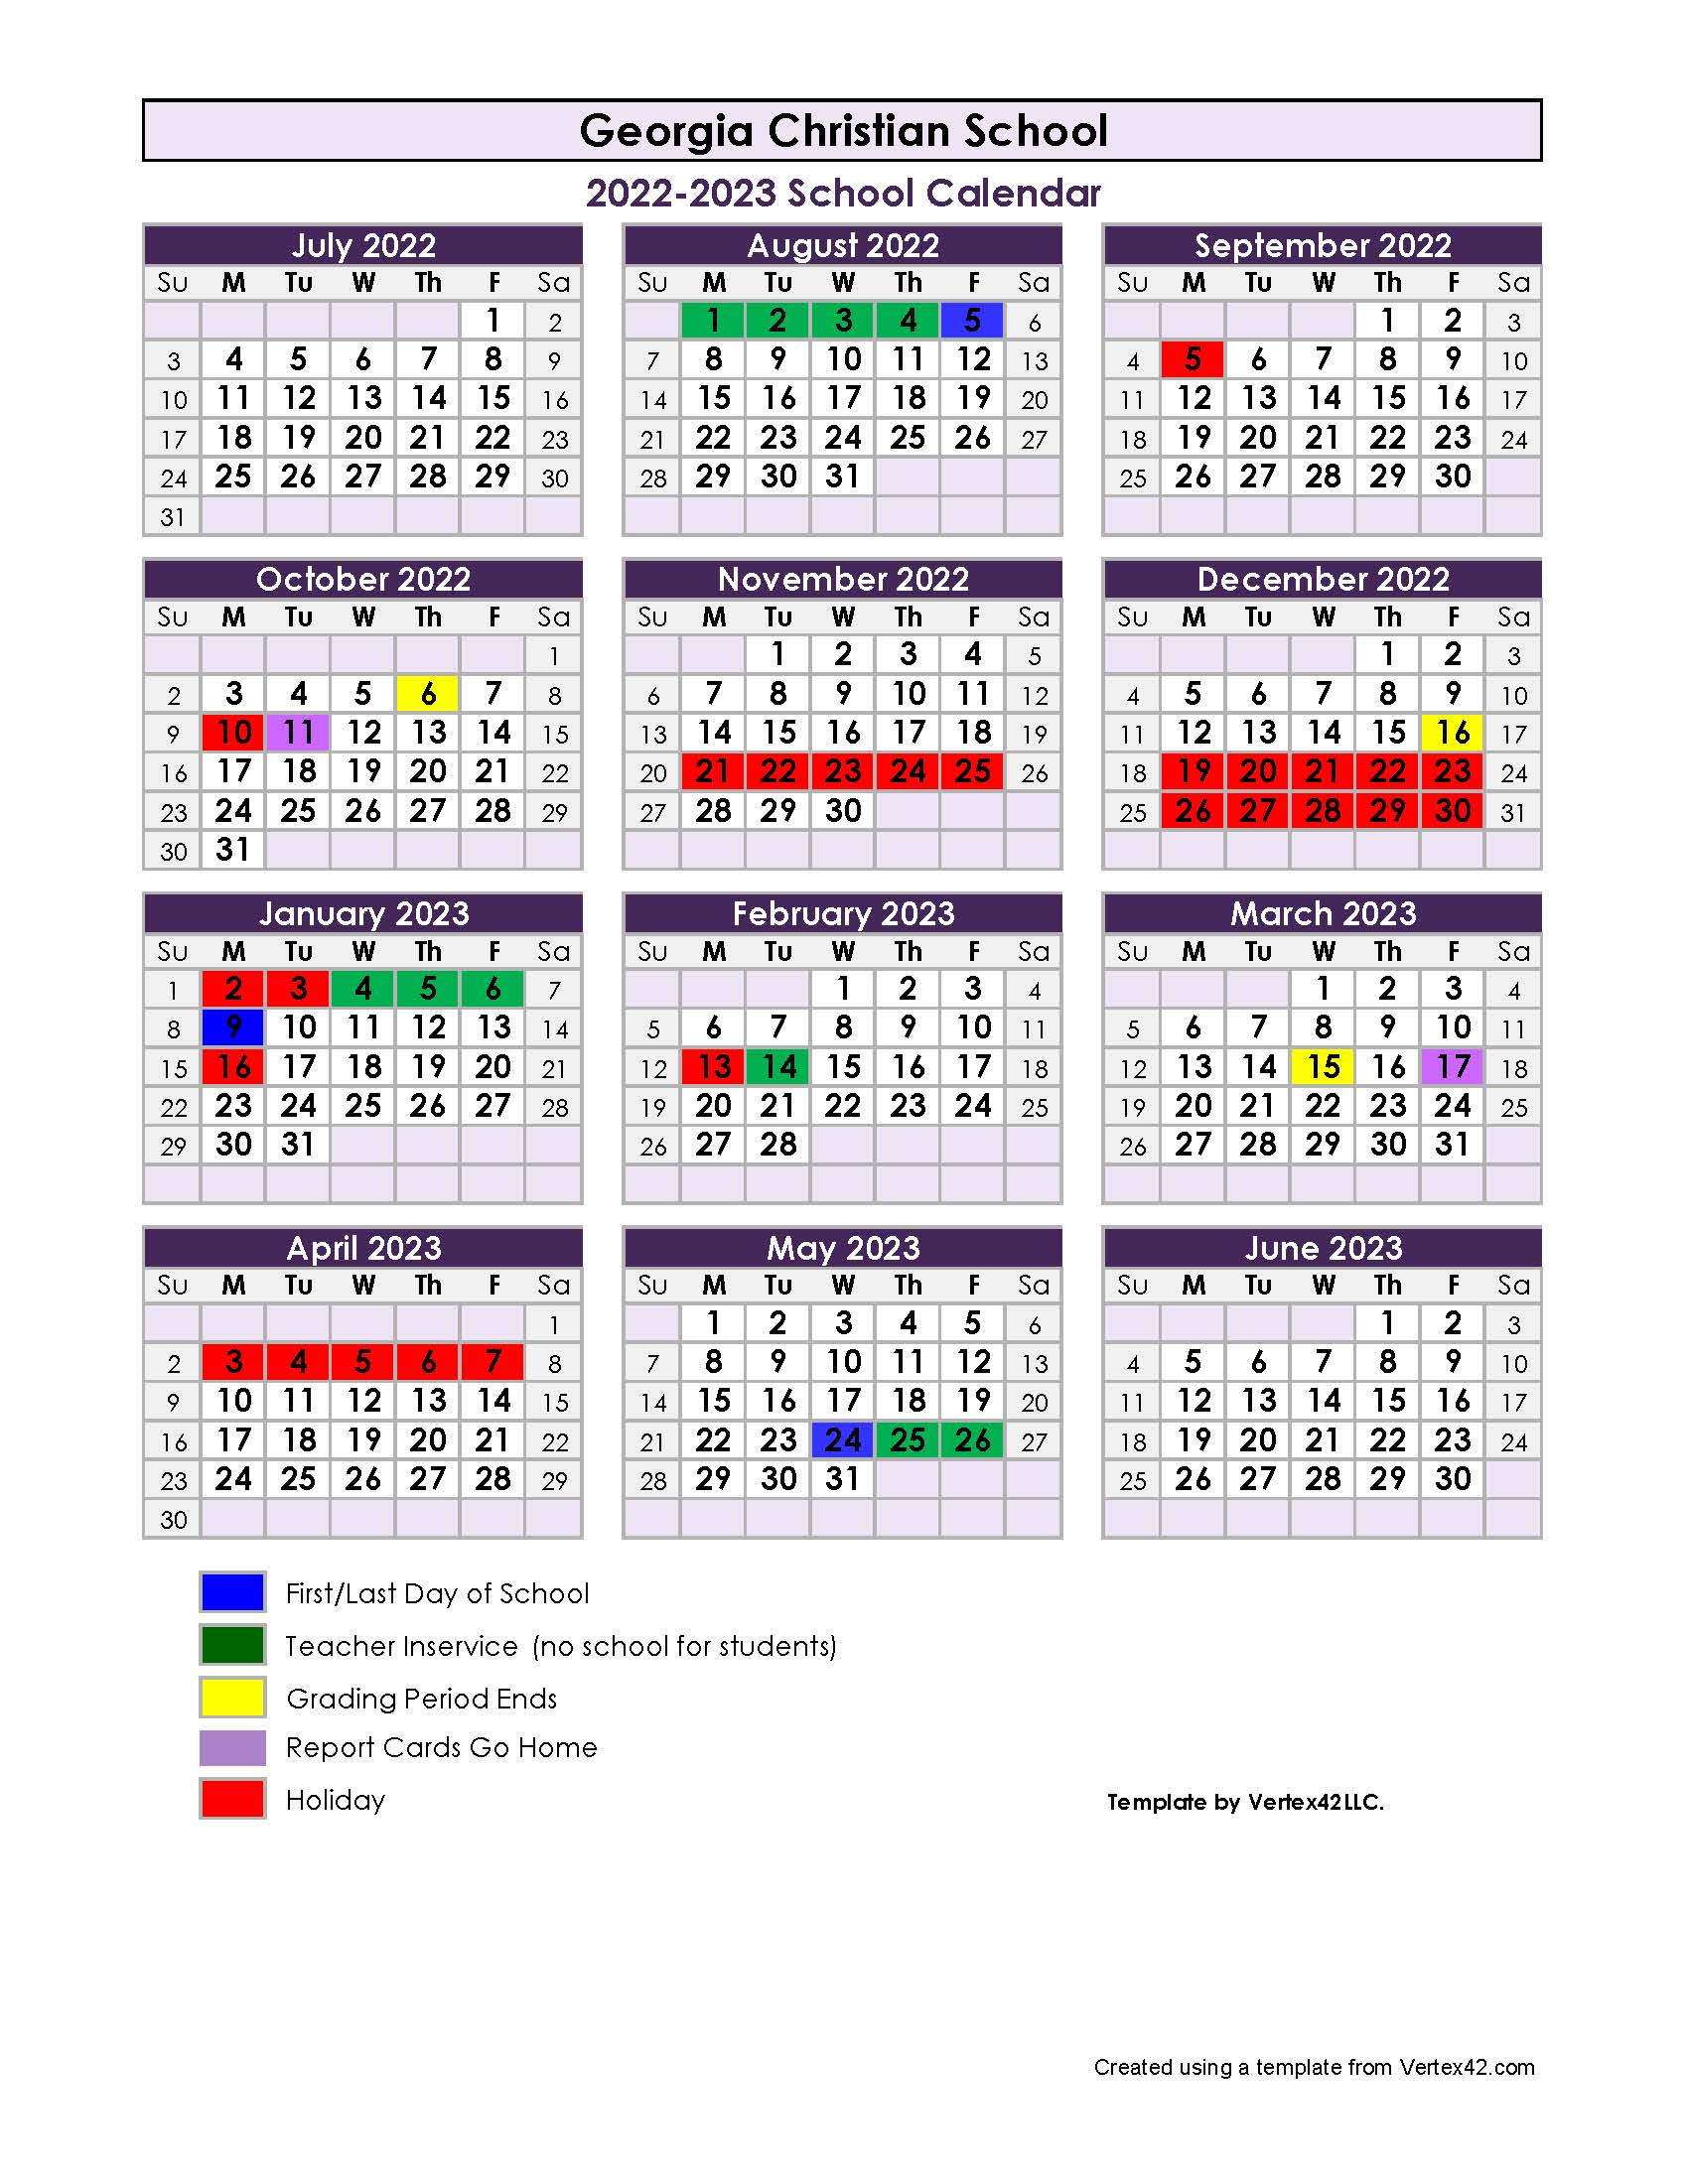 calendar-georgia-christian-school